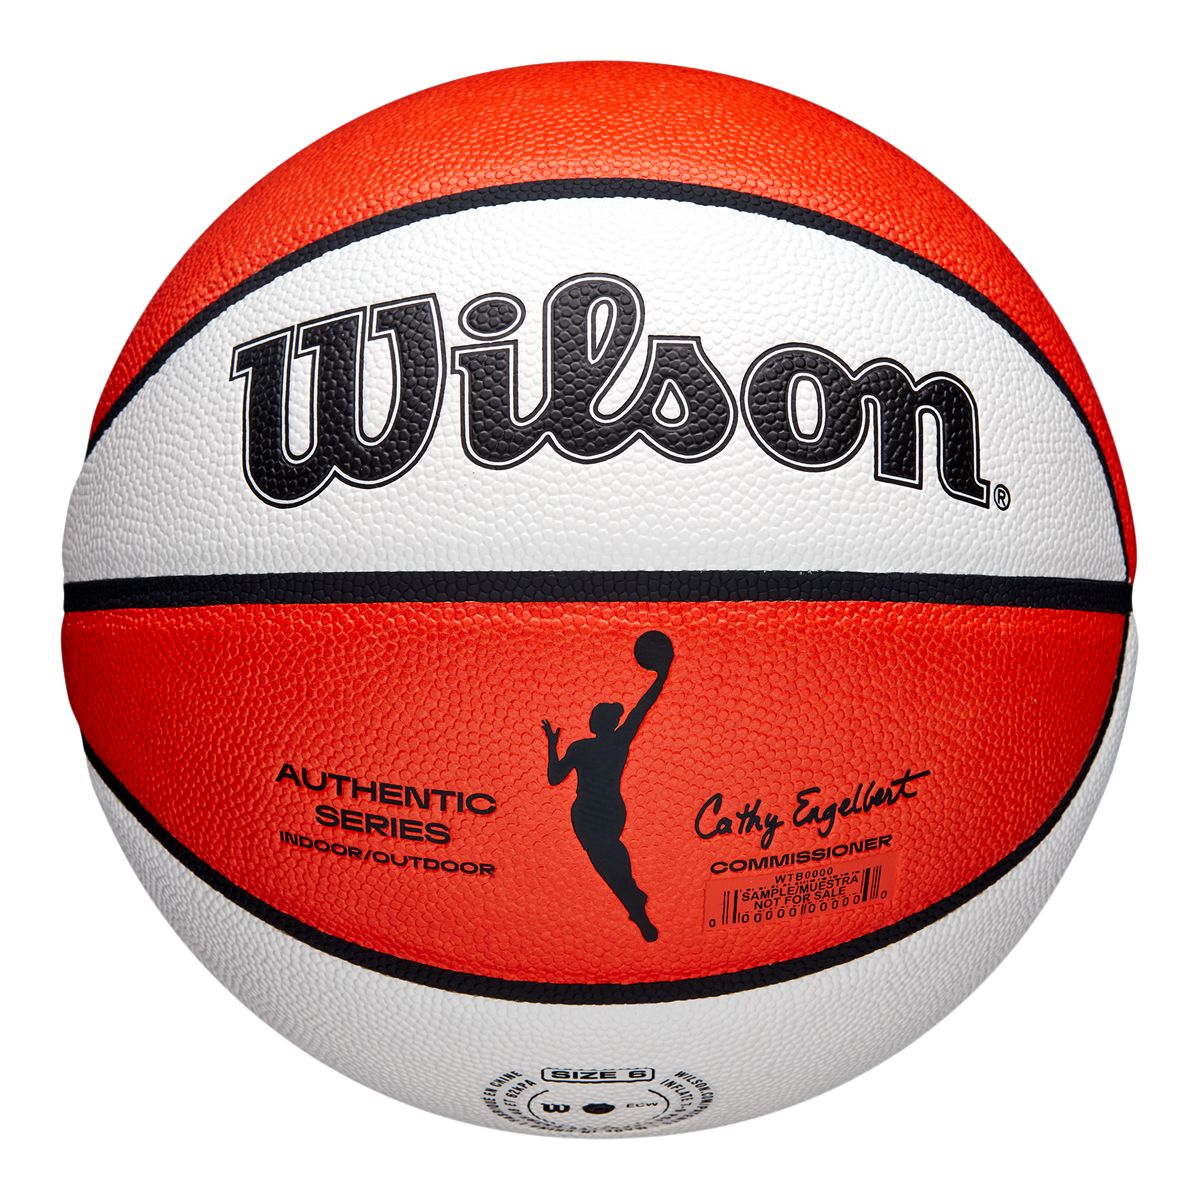 Image of Wilson Wnba Authentic Basketball Size 6 Indoor/Outdoor